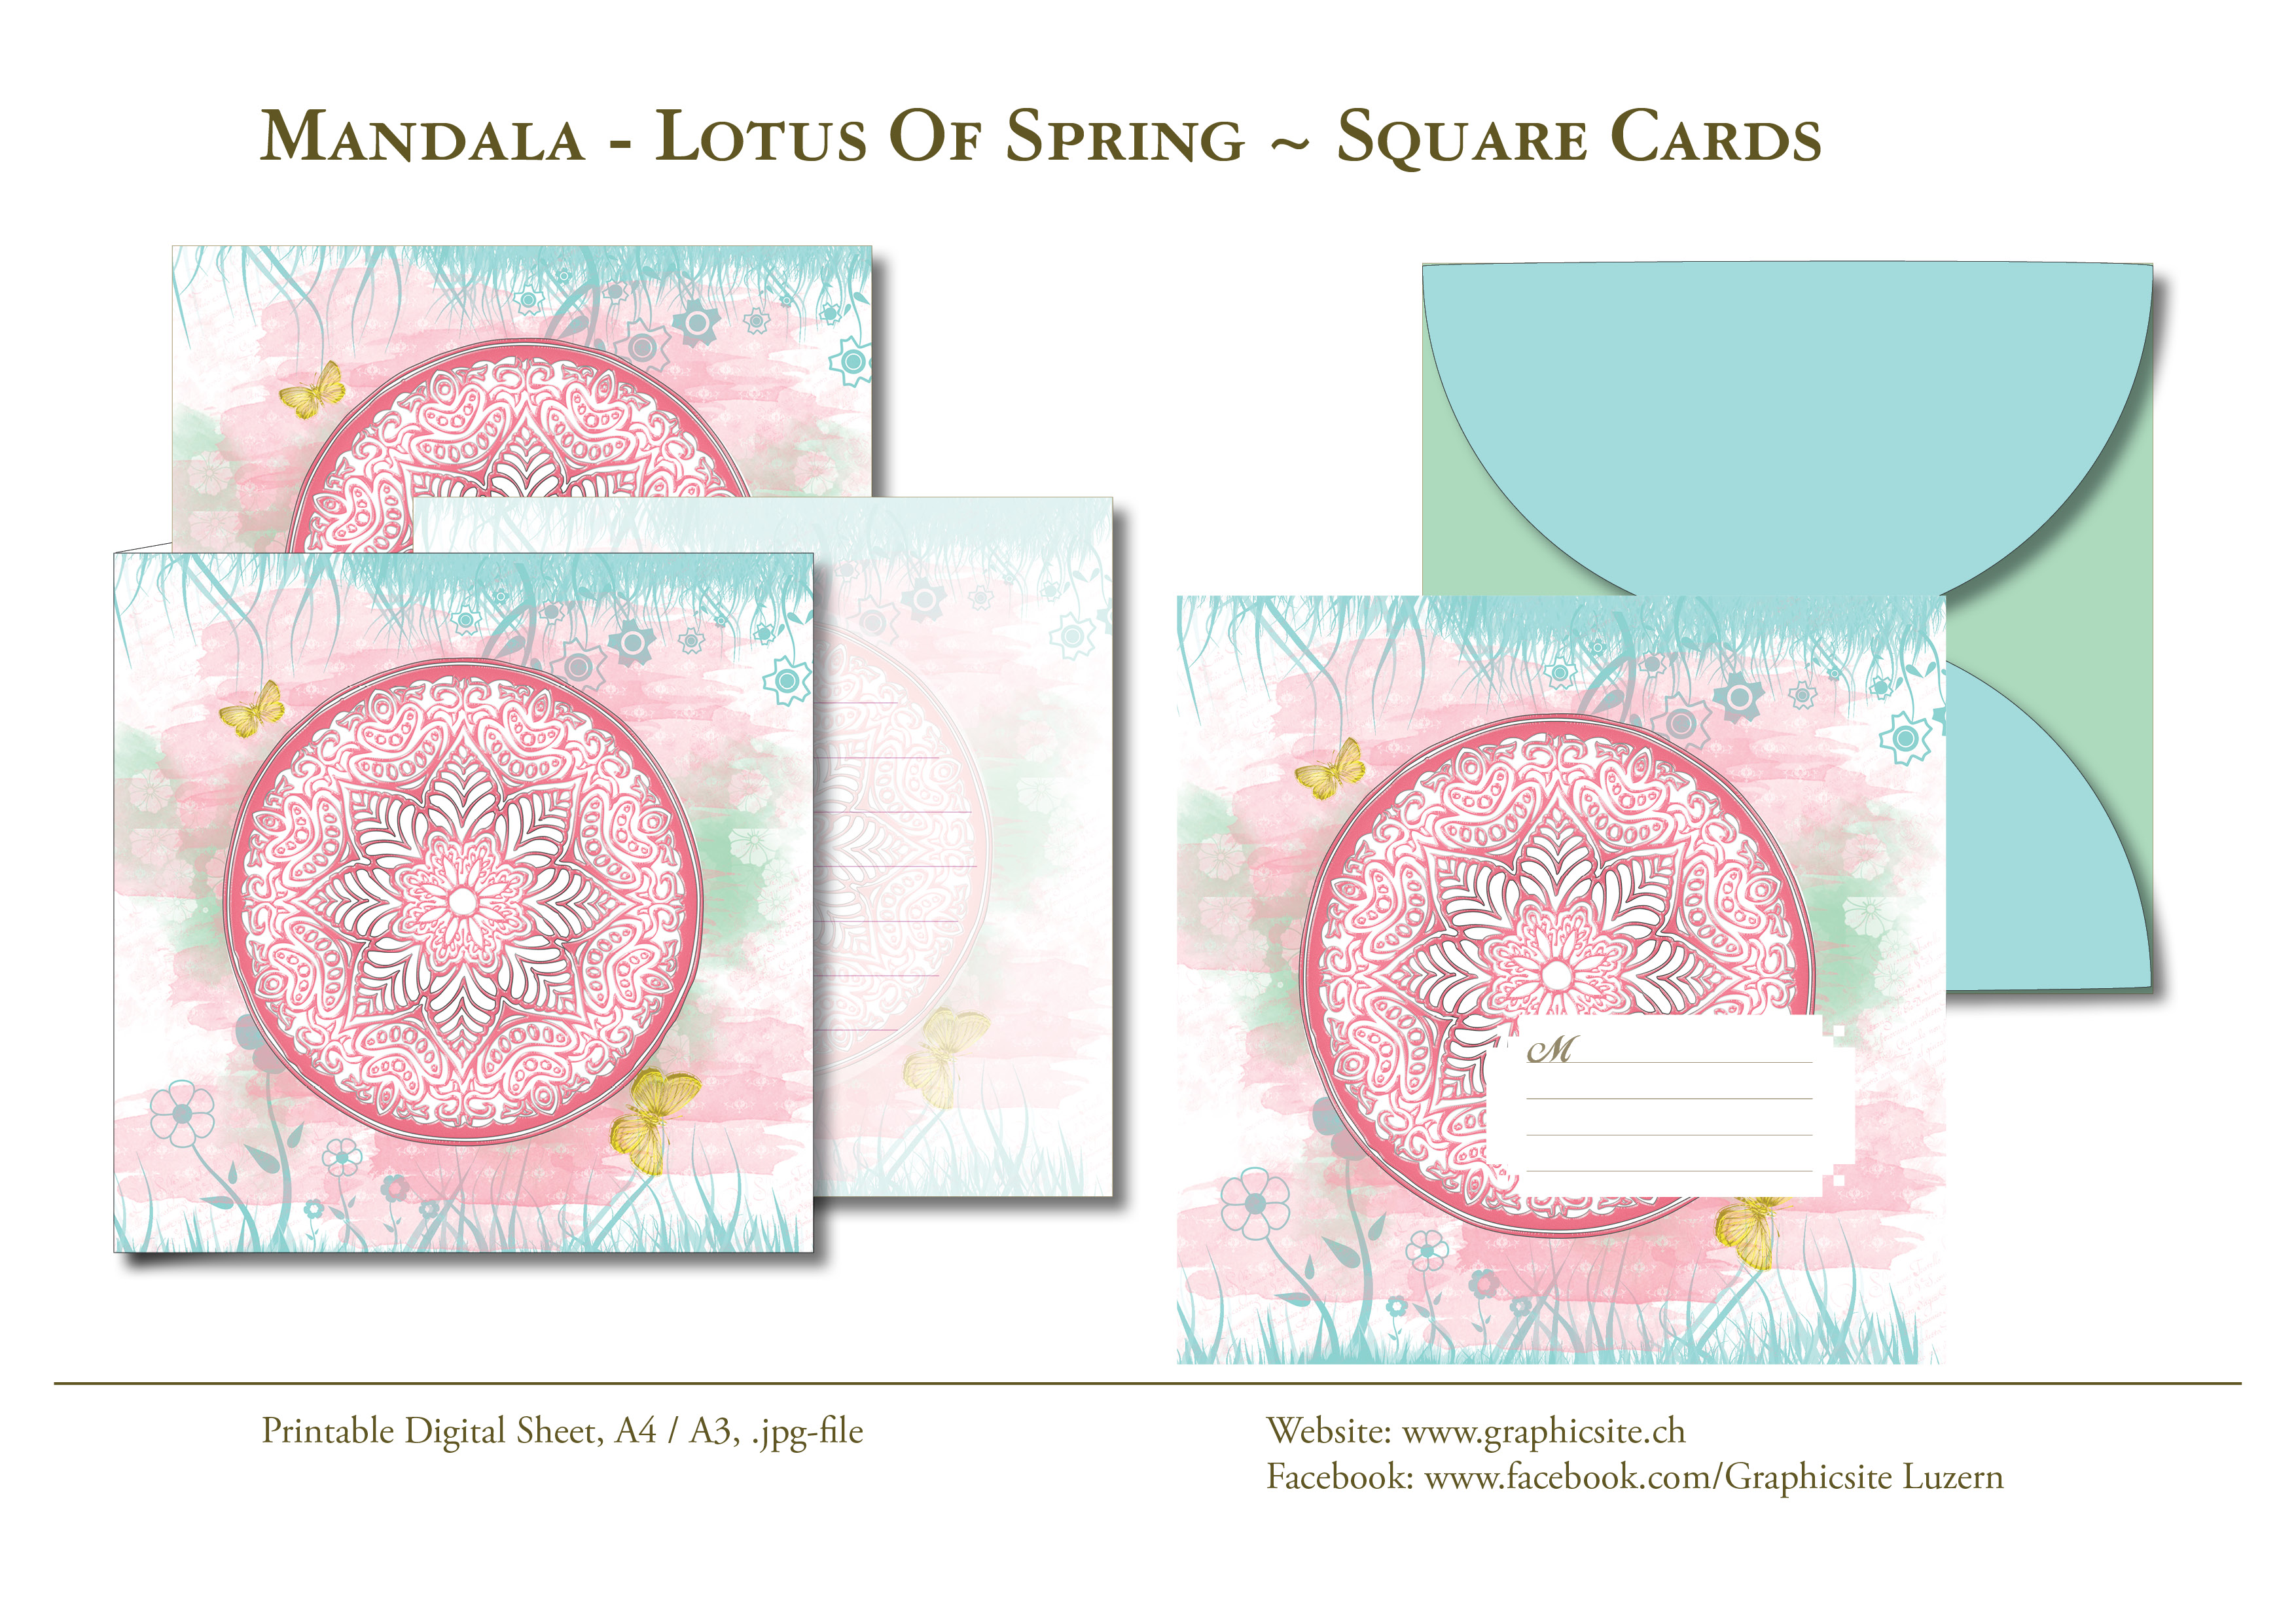 Karten selber drucken - Mandala LotusOfSpring - Karten, Grusskarten, Kuvert, Grafiker Luzern, Schweiz